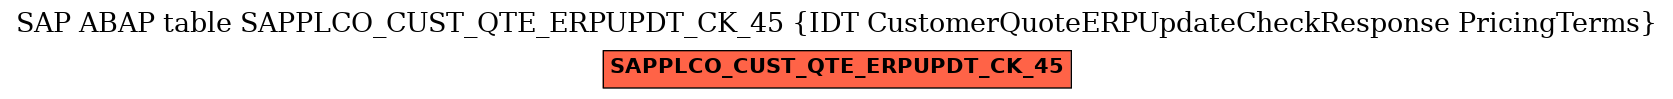 E-R Diagram for table SAPPLCO_CUST_QTE_ERPUPDT_CK_45 (IDT CustomerQuoteERPUpdateCheckResponse PricingTerms)